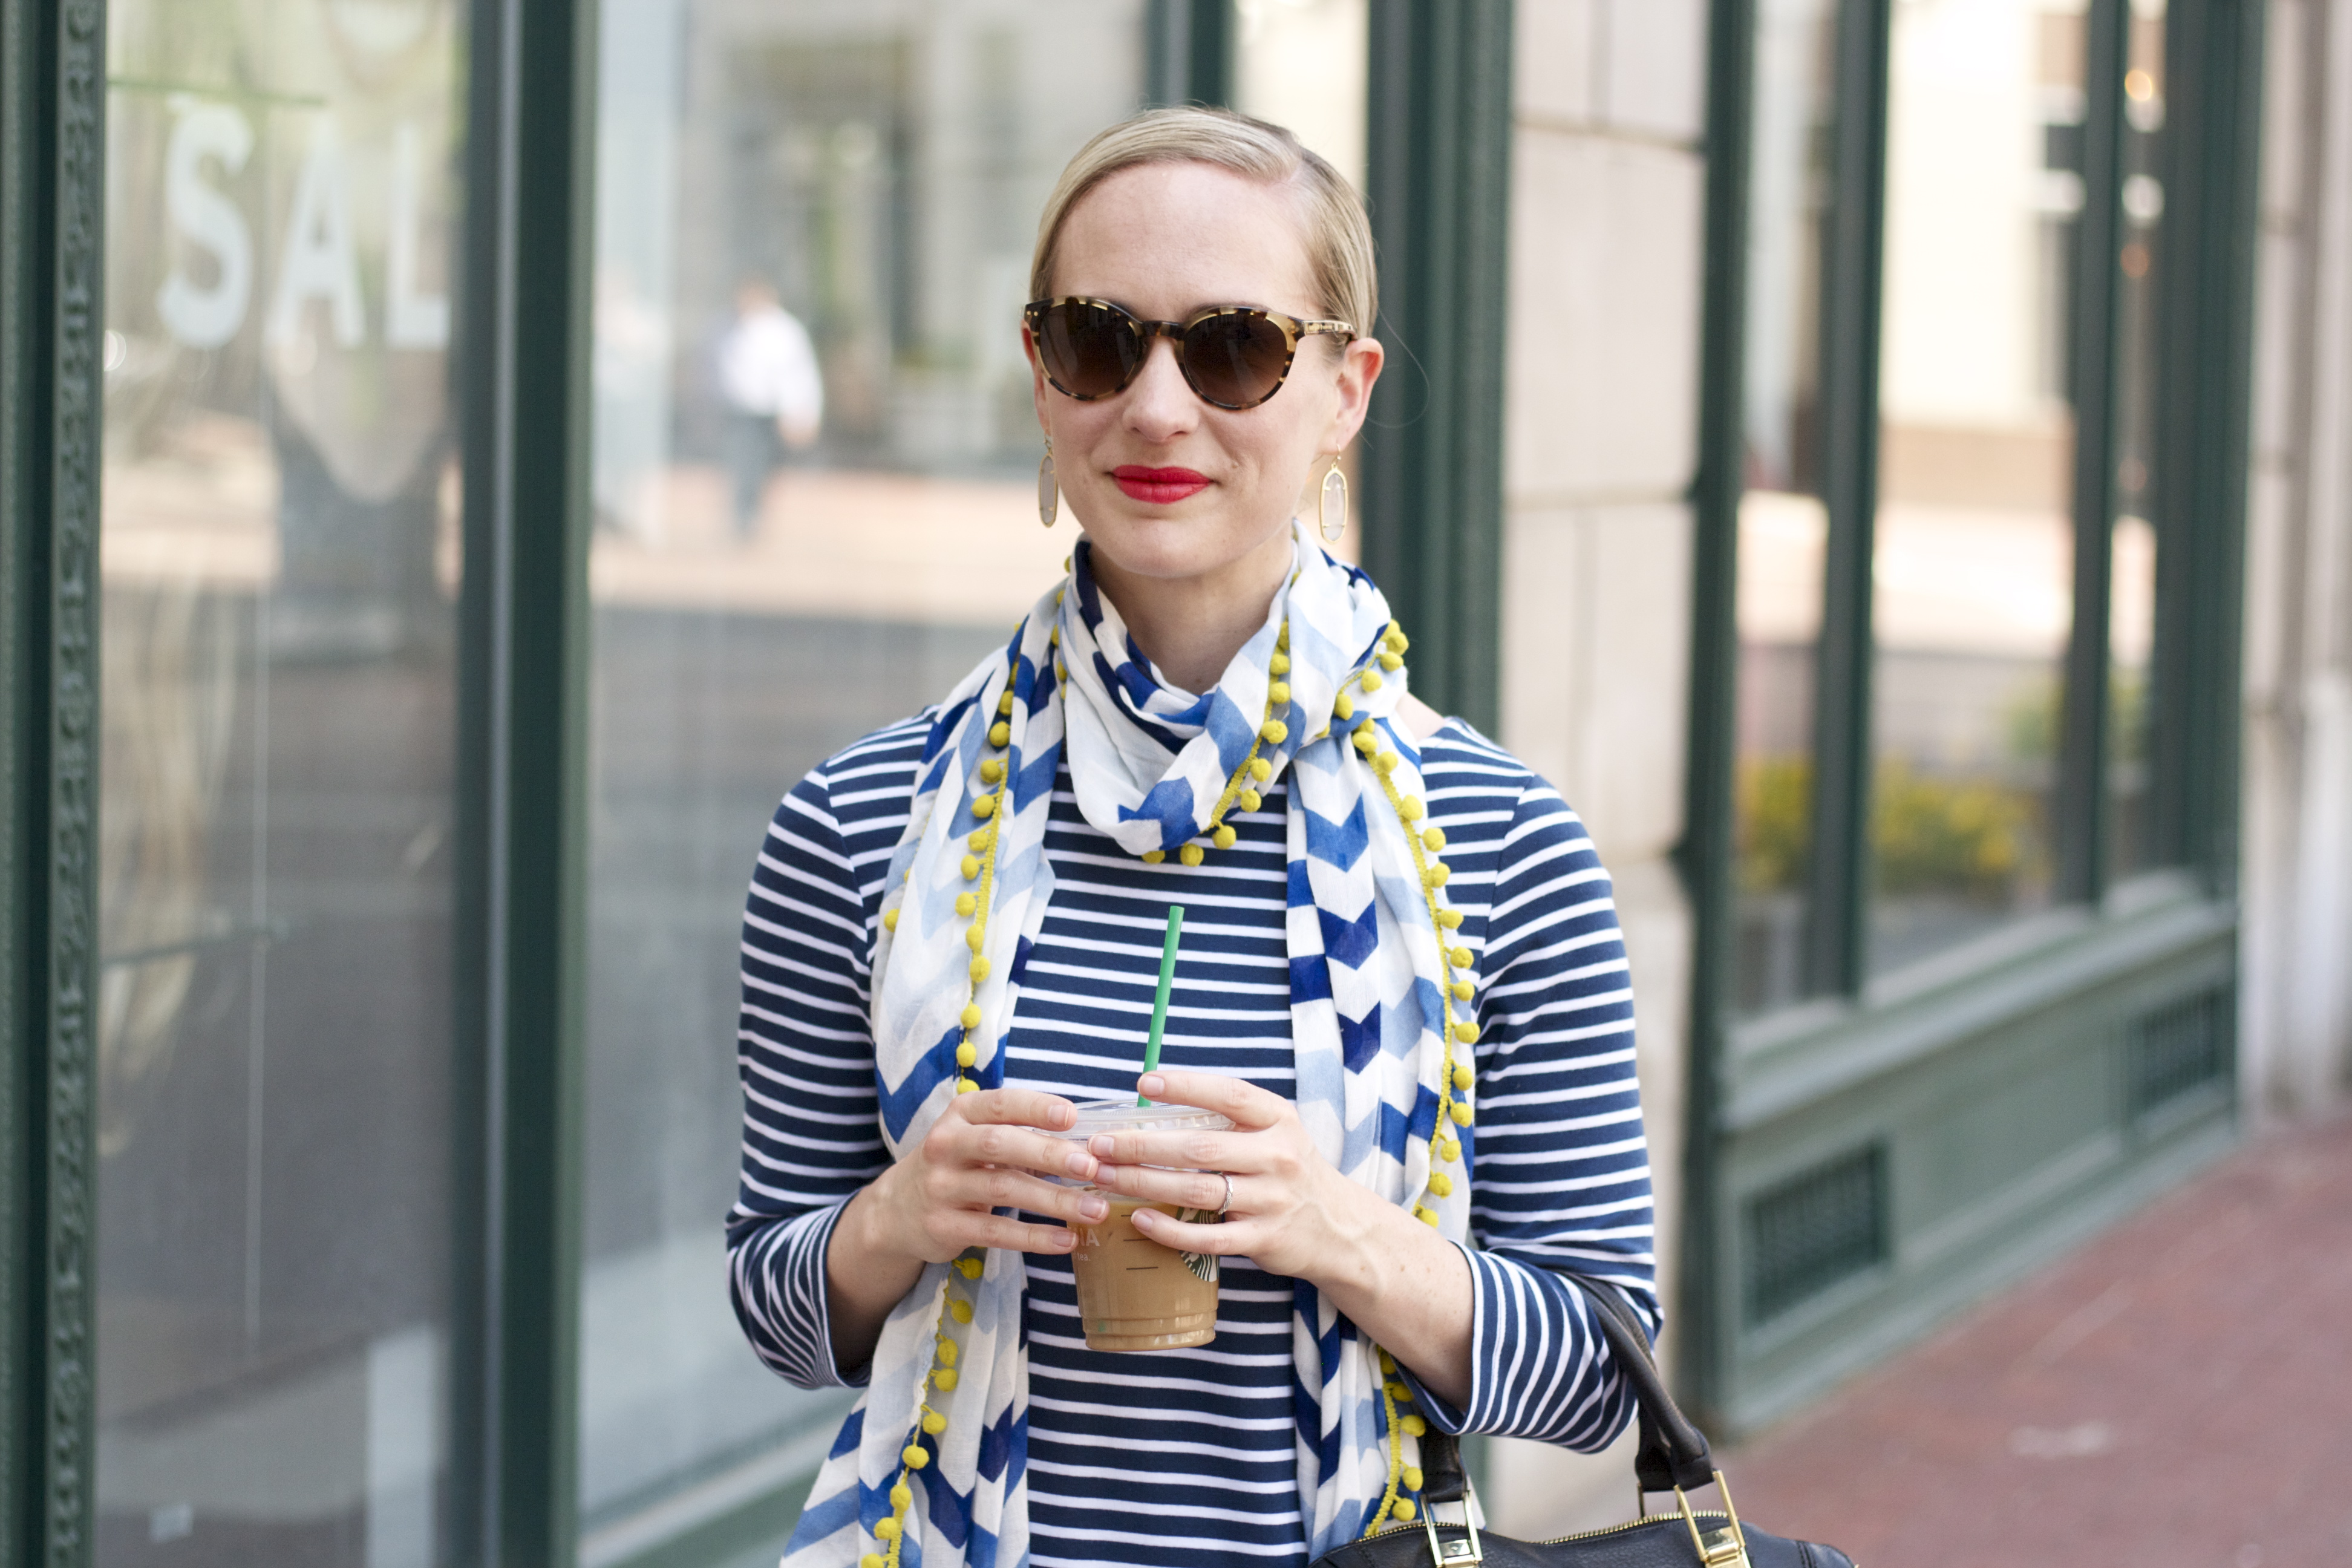 striped t-shirt dress, chevron spring scarf, blue suede flats